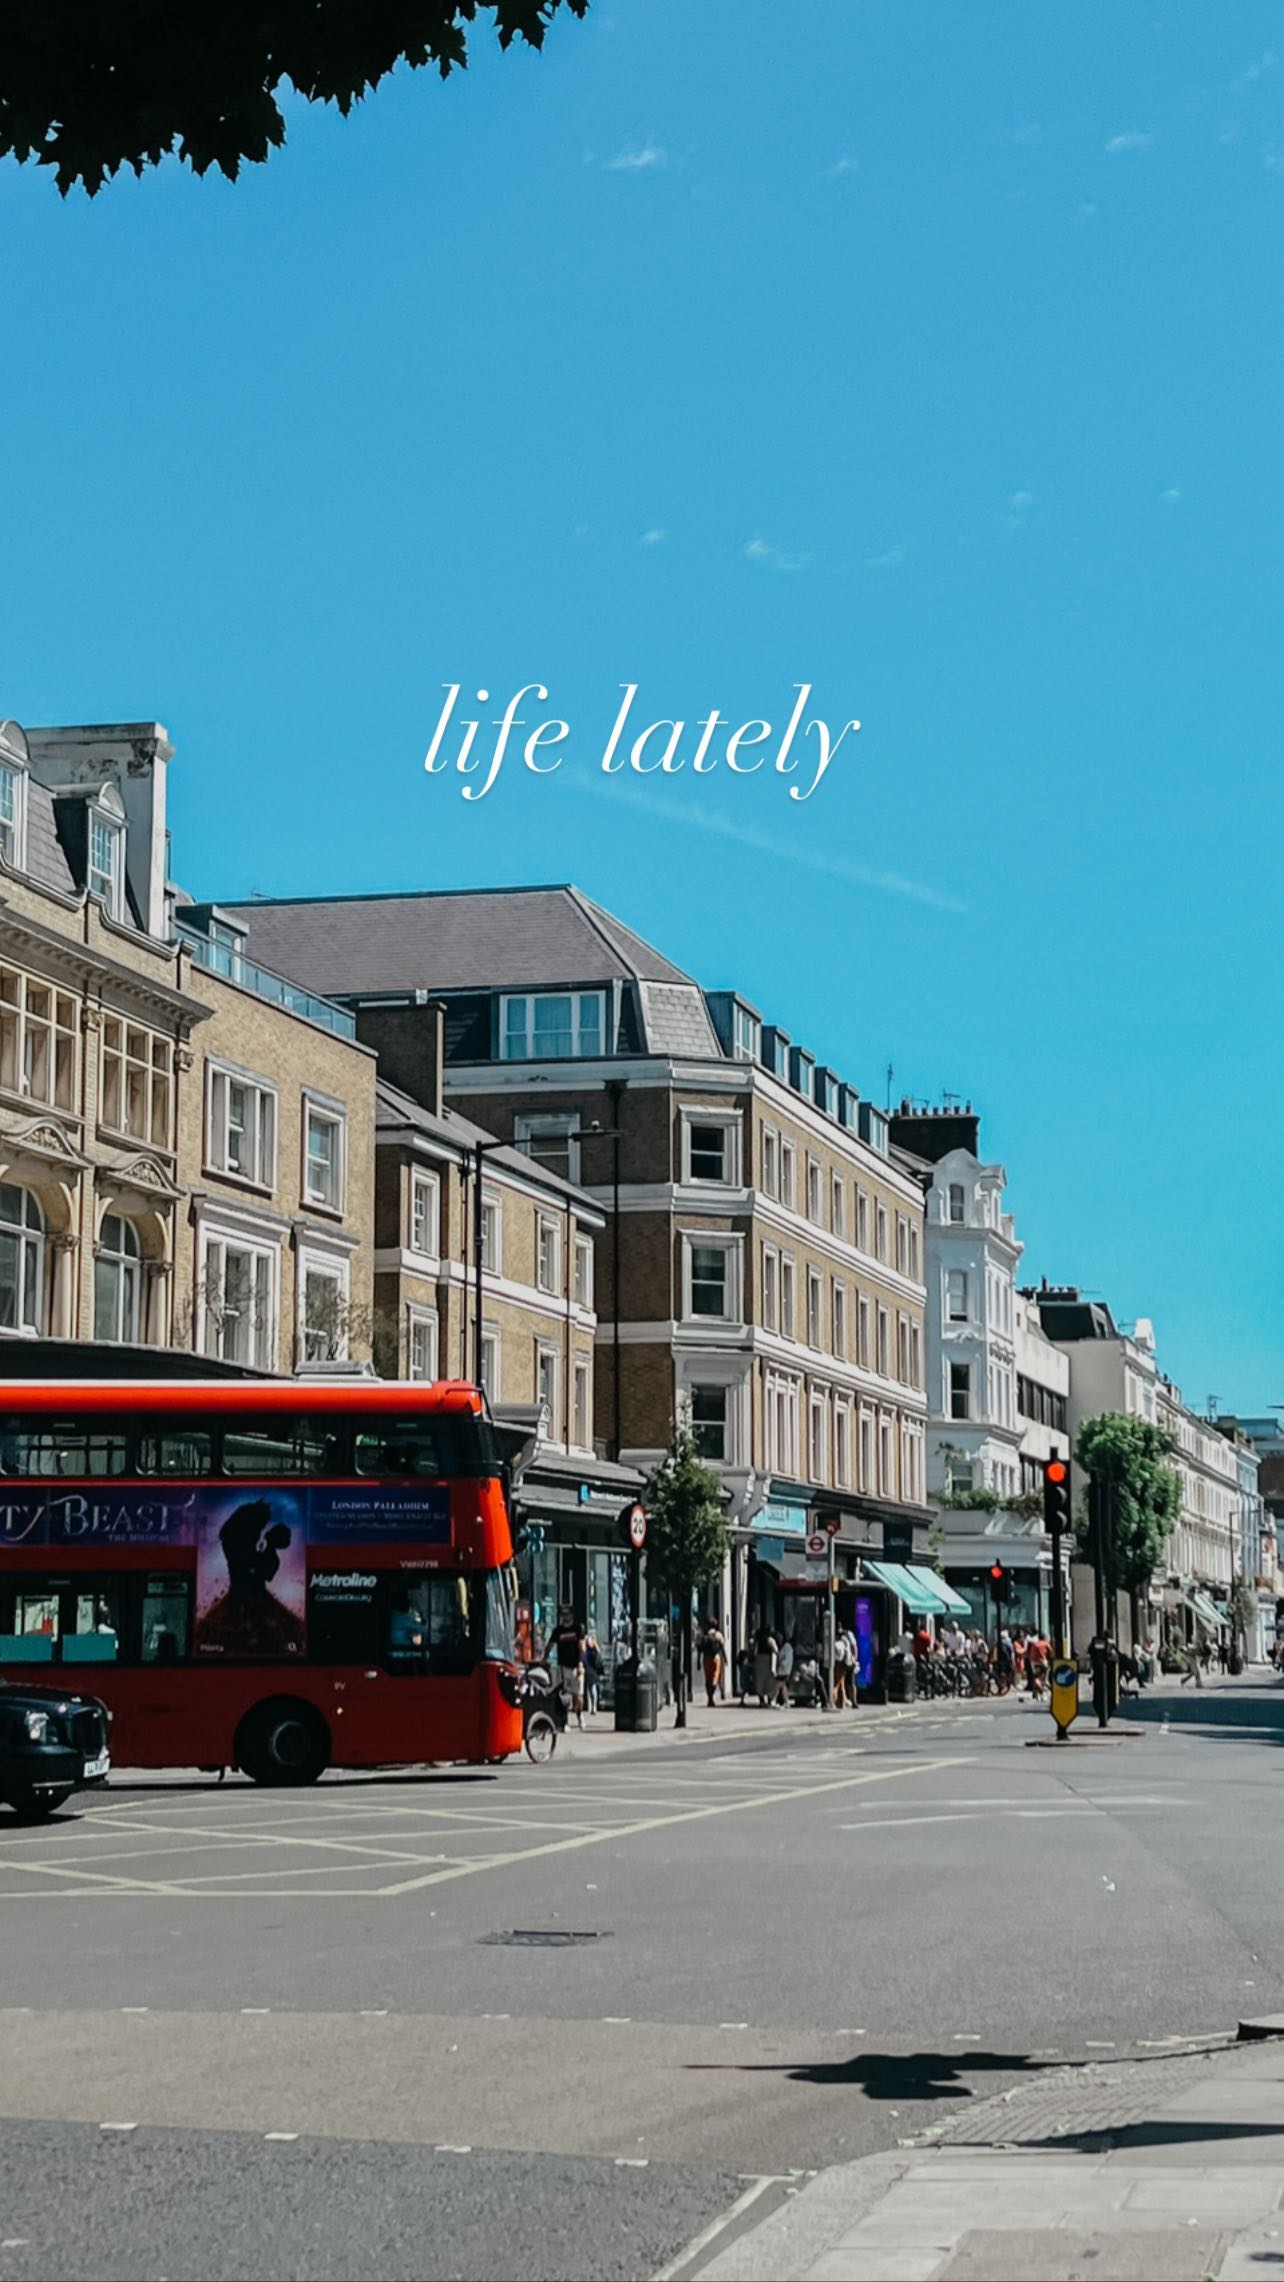 londonlife 🇬🇧. 
—-
#london #reels #londonlife #londres #nottinghill #sunny #weekendvibes #love #sunnydays